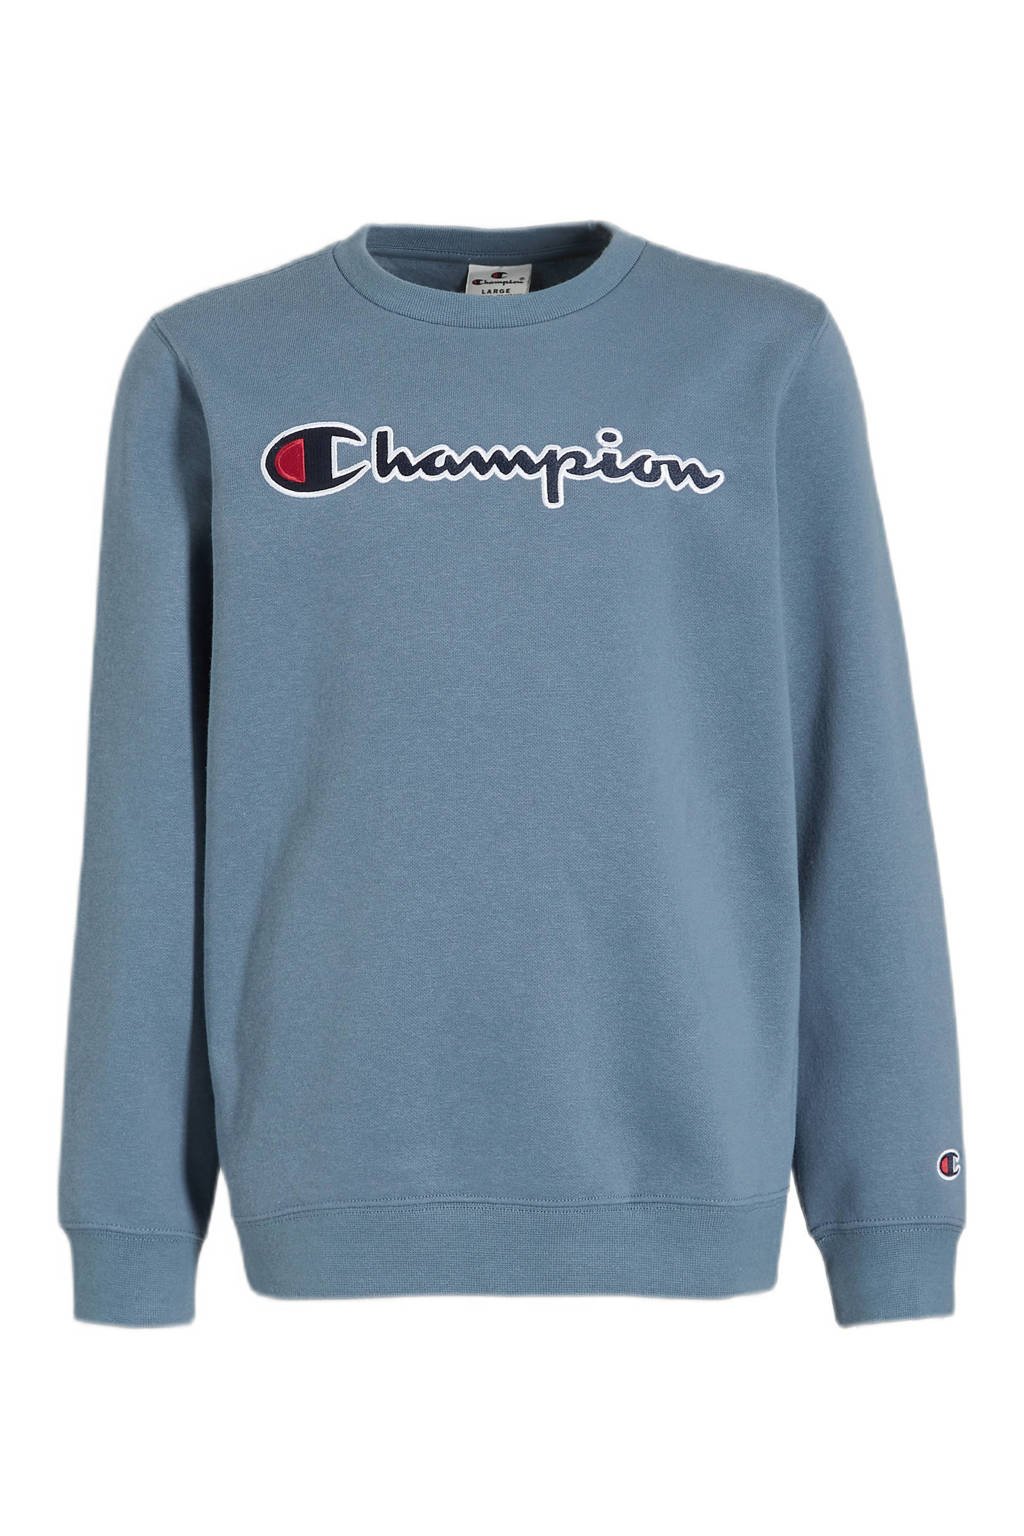 explosie Zachte voeten sterk Champion sweater met logo zachtblauw | wehkamp